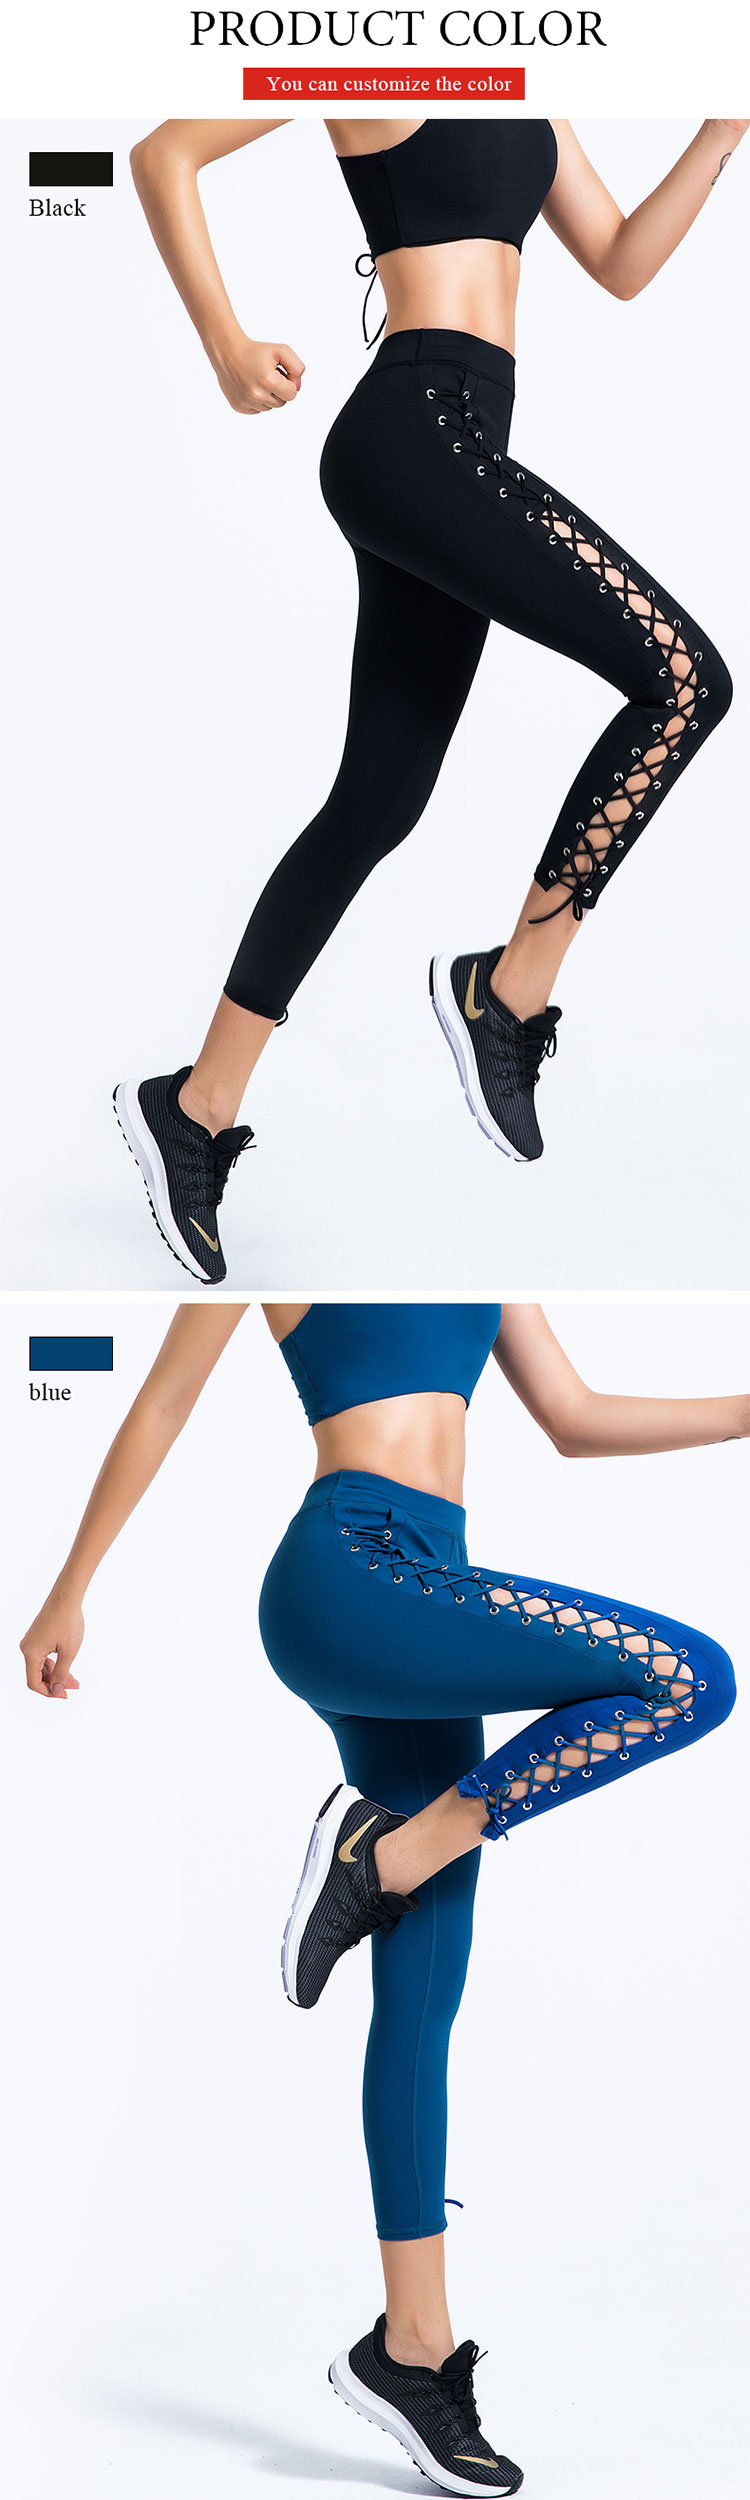 Shaping yoga pants - Huallen Sportswear Manufacturer